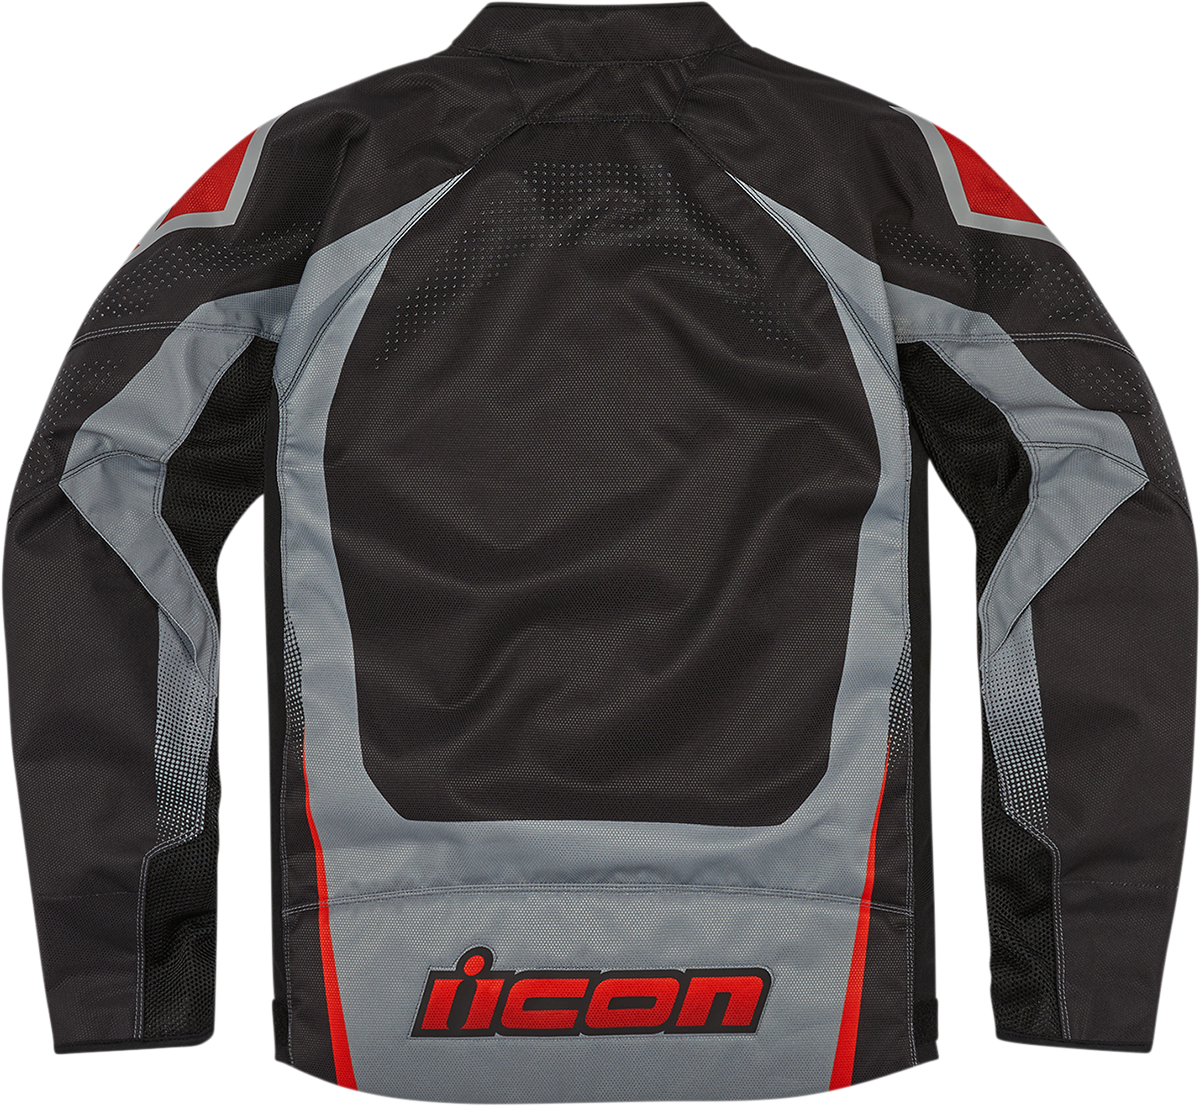 ICON Hooligan Ultrabolt Jacket - Black/Gray/Red - Small 2820-5528